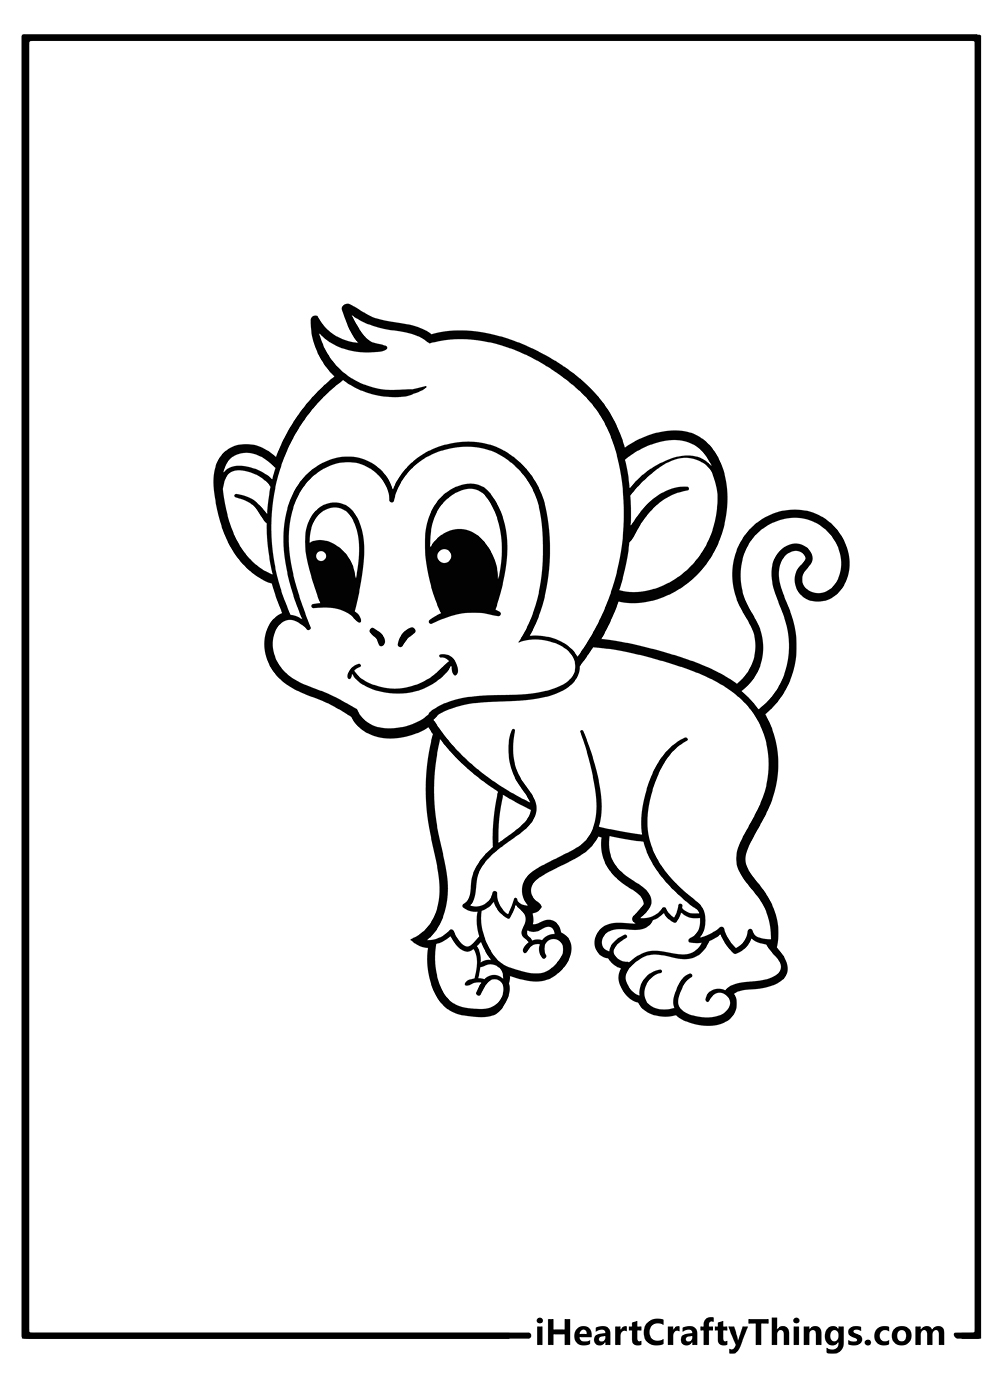 Monkey Coloring Original Sheet for children free download